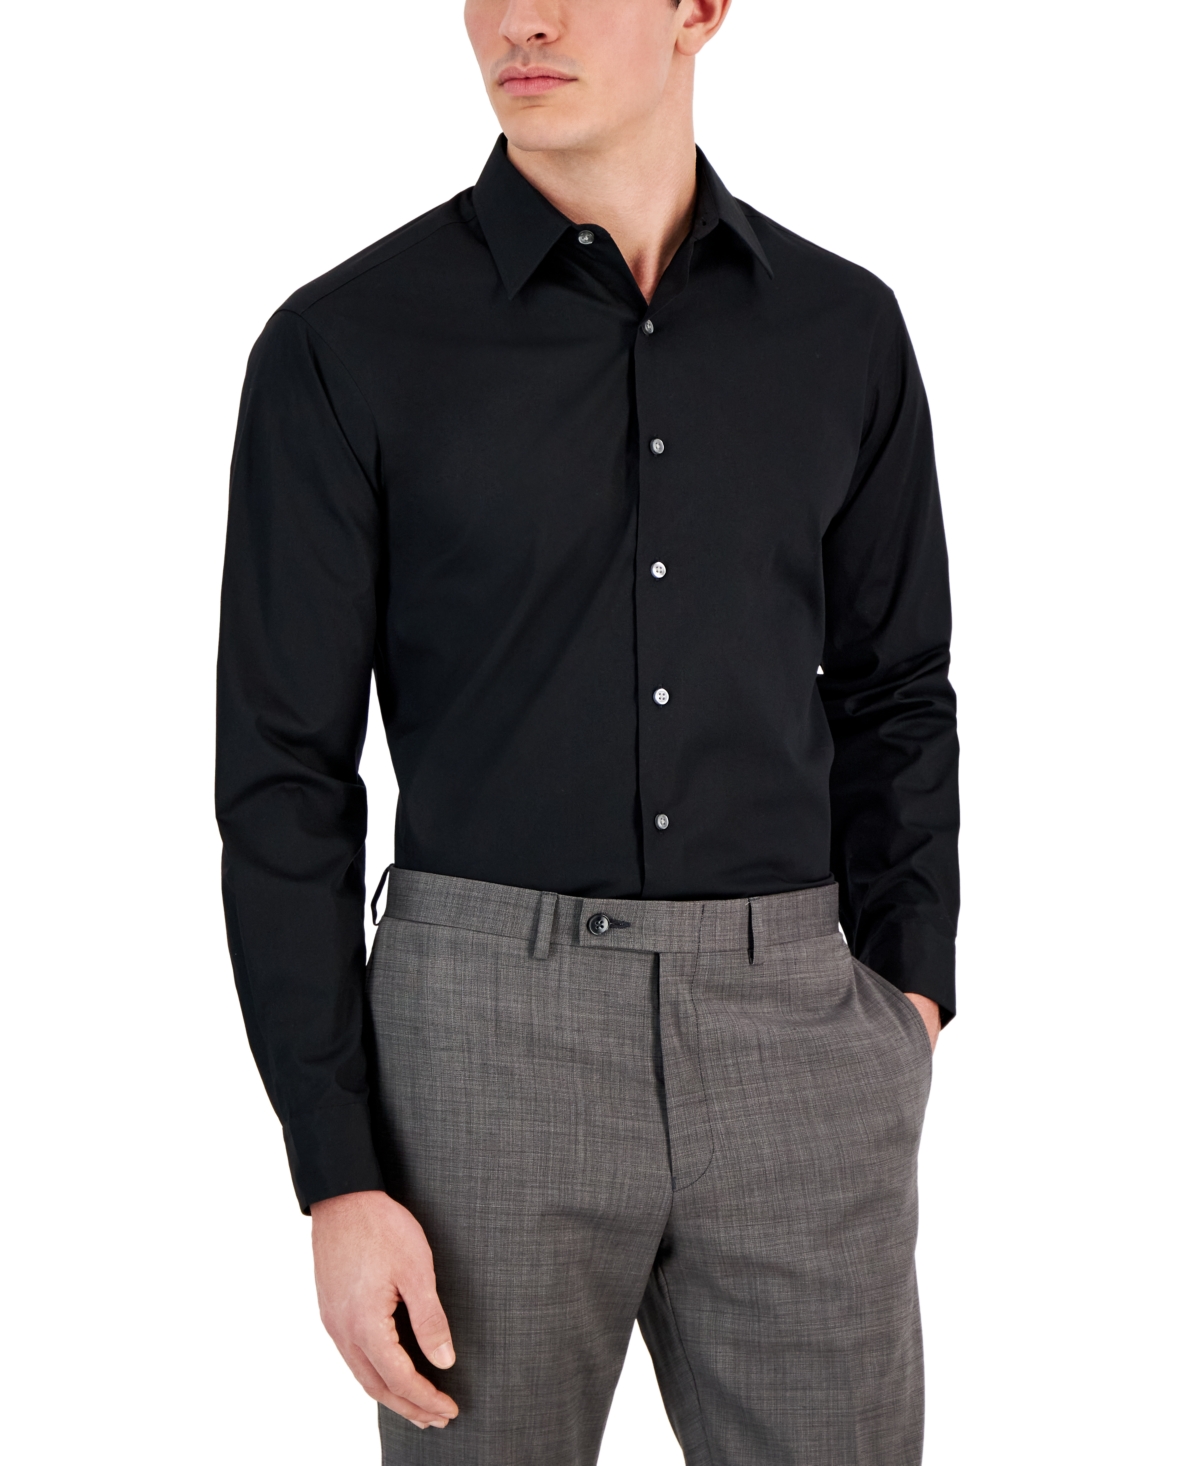 Men's Regular-Fit Solid Dress Shirt, Created for Macy's - Deep Black